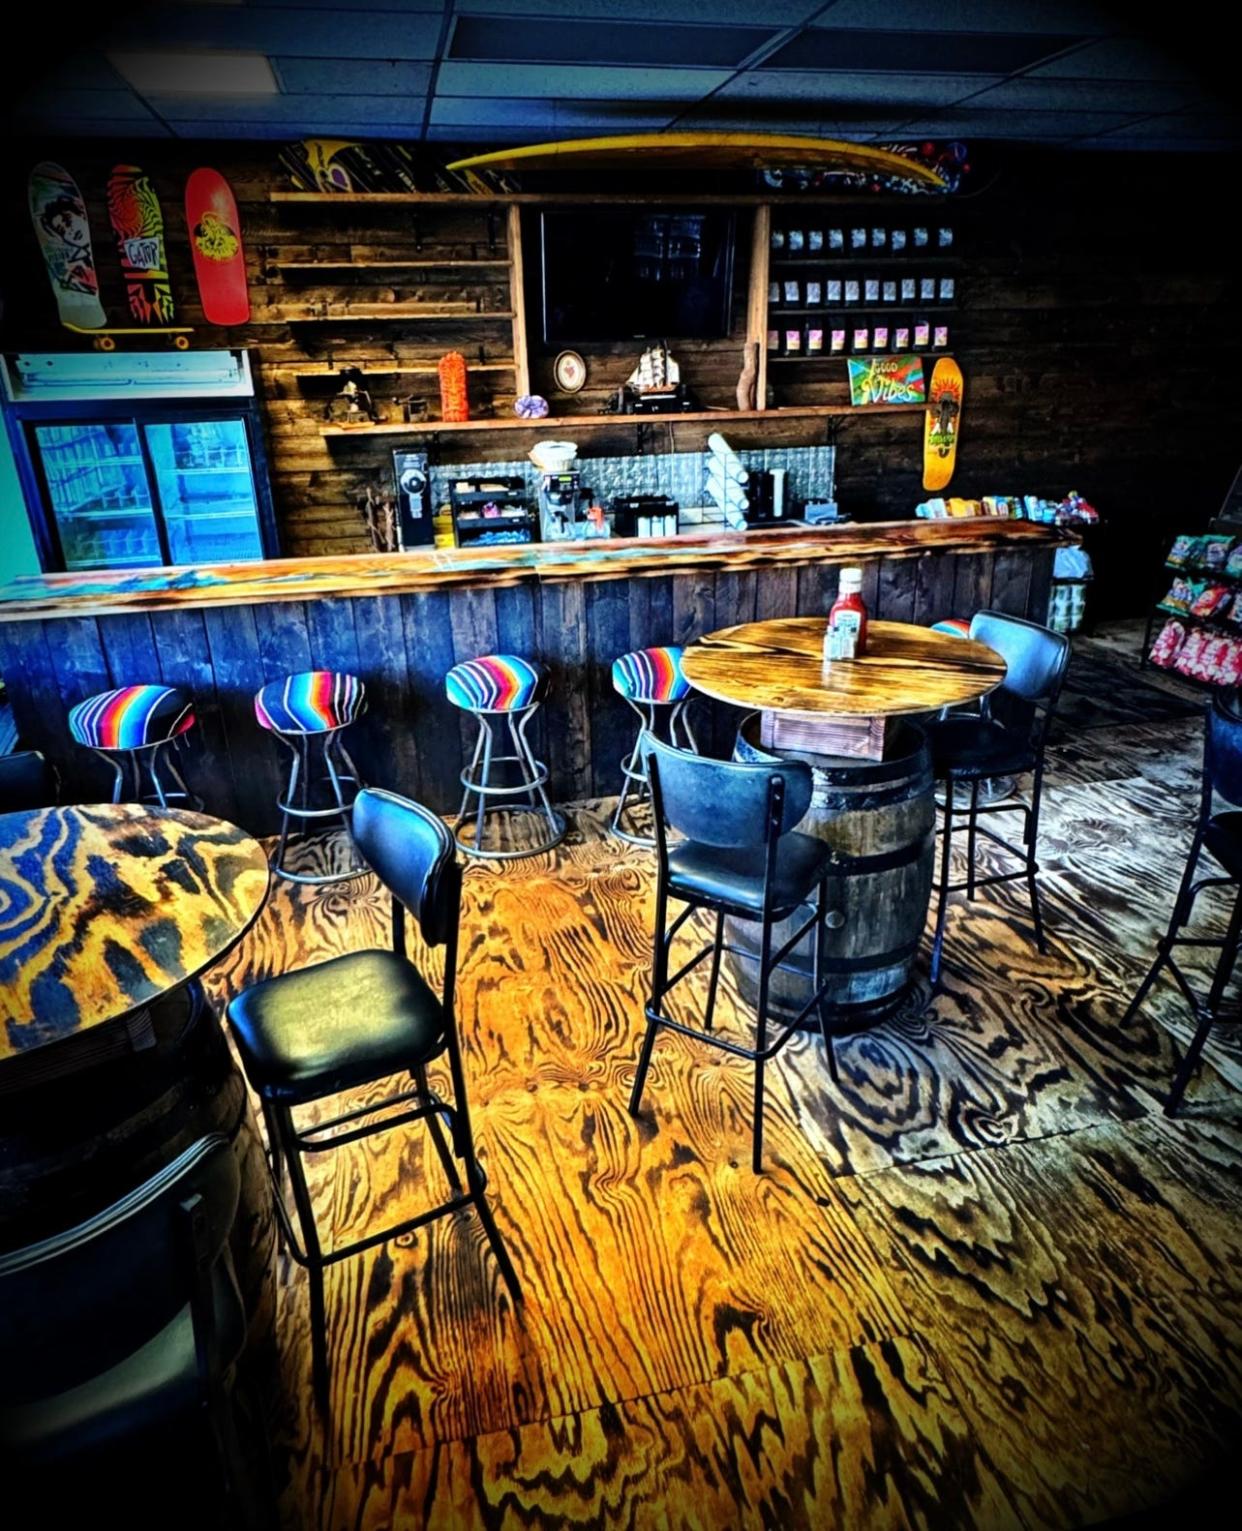 The new Coffee Surf Co. location inside Pat's Deli in Brielle.